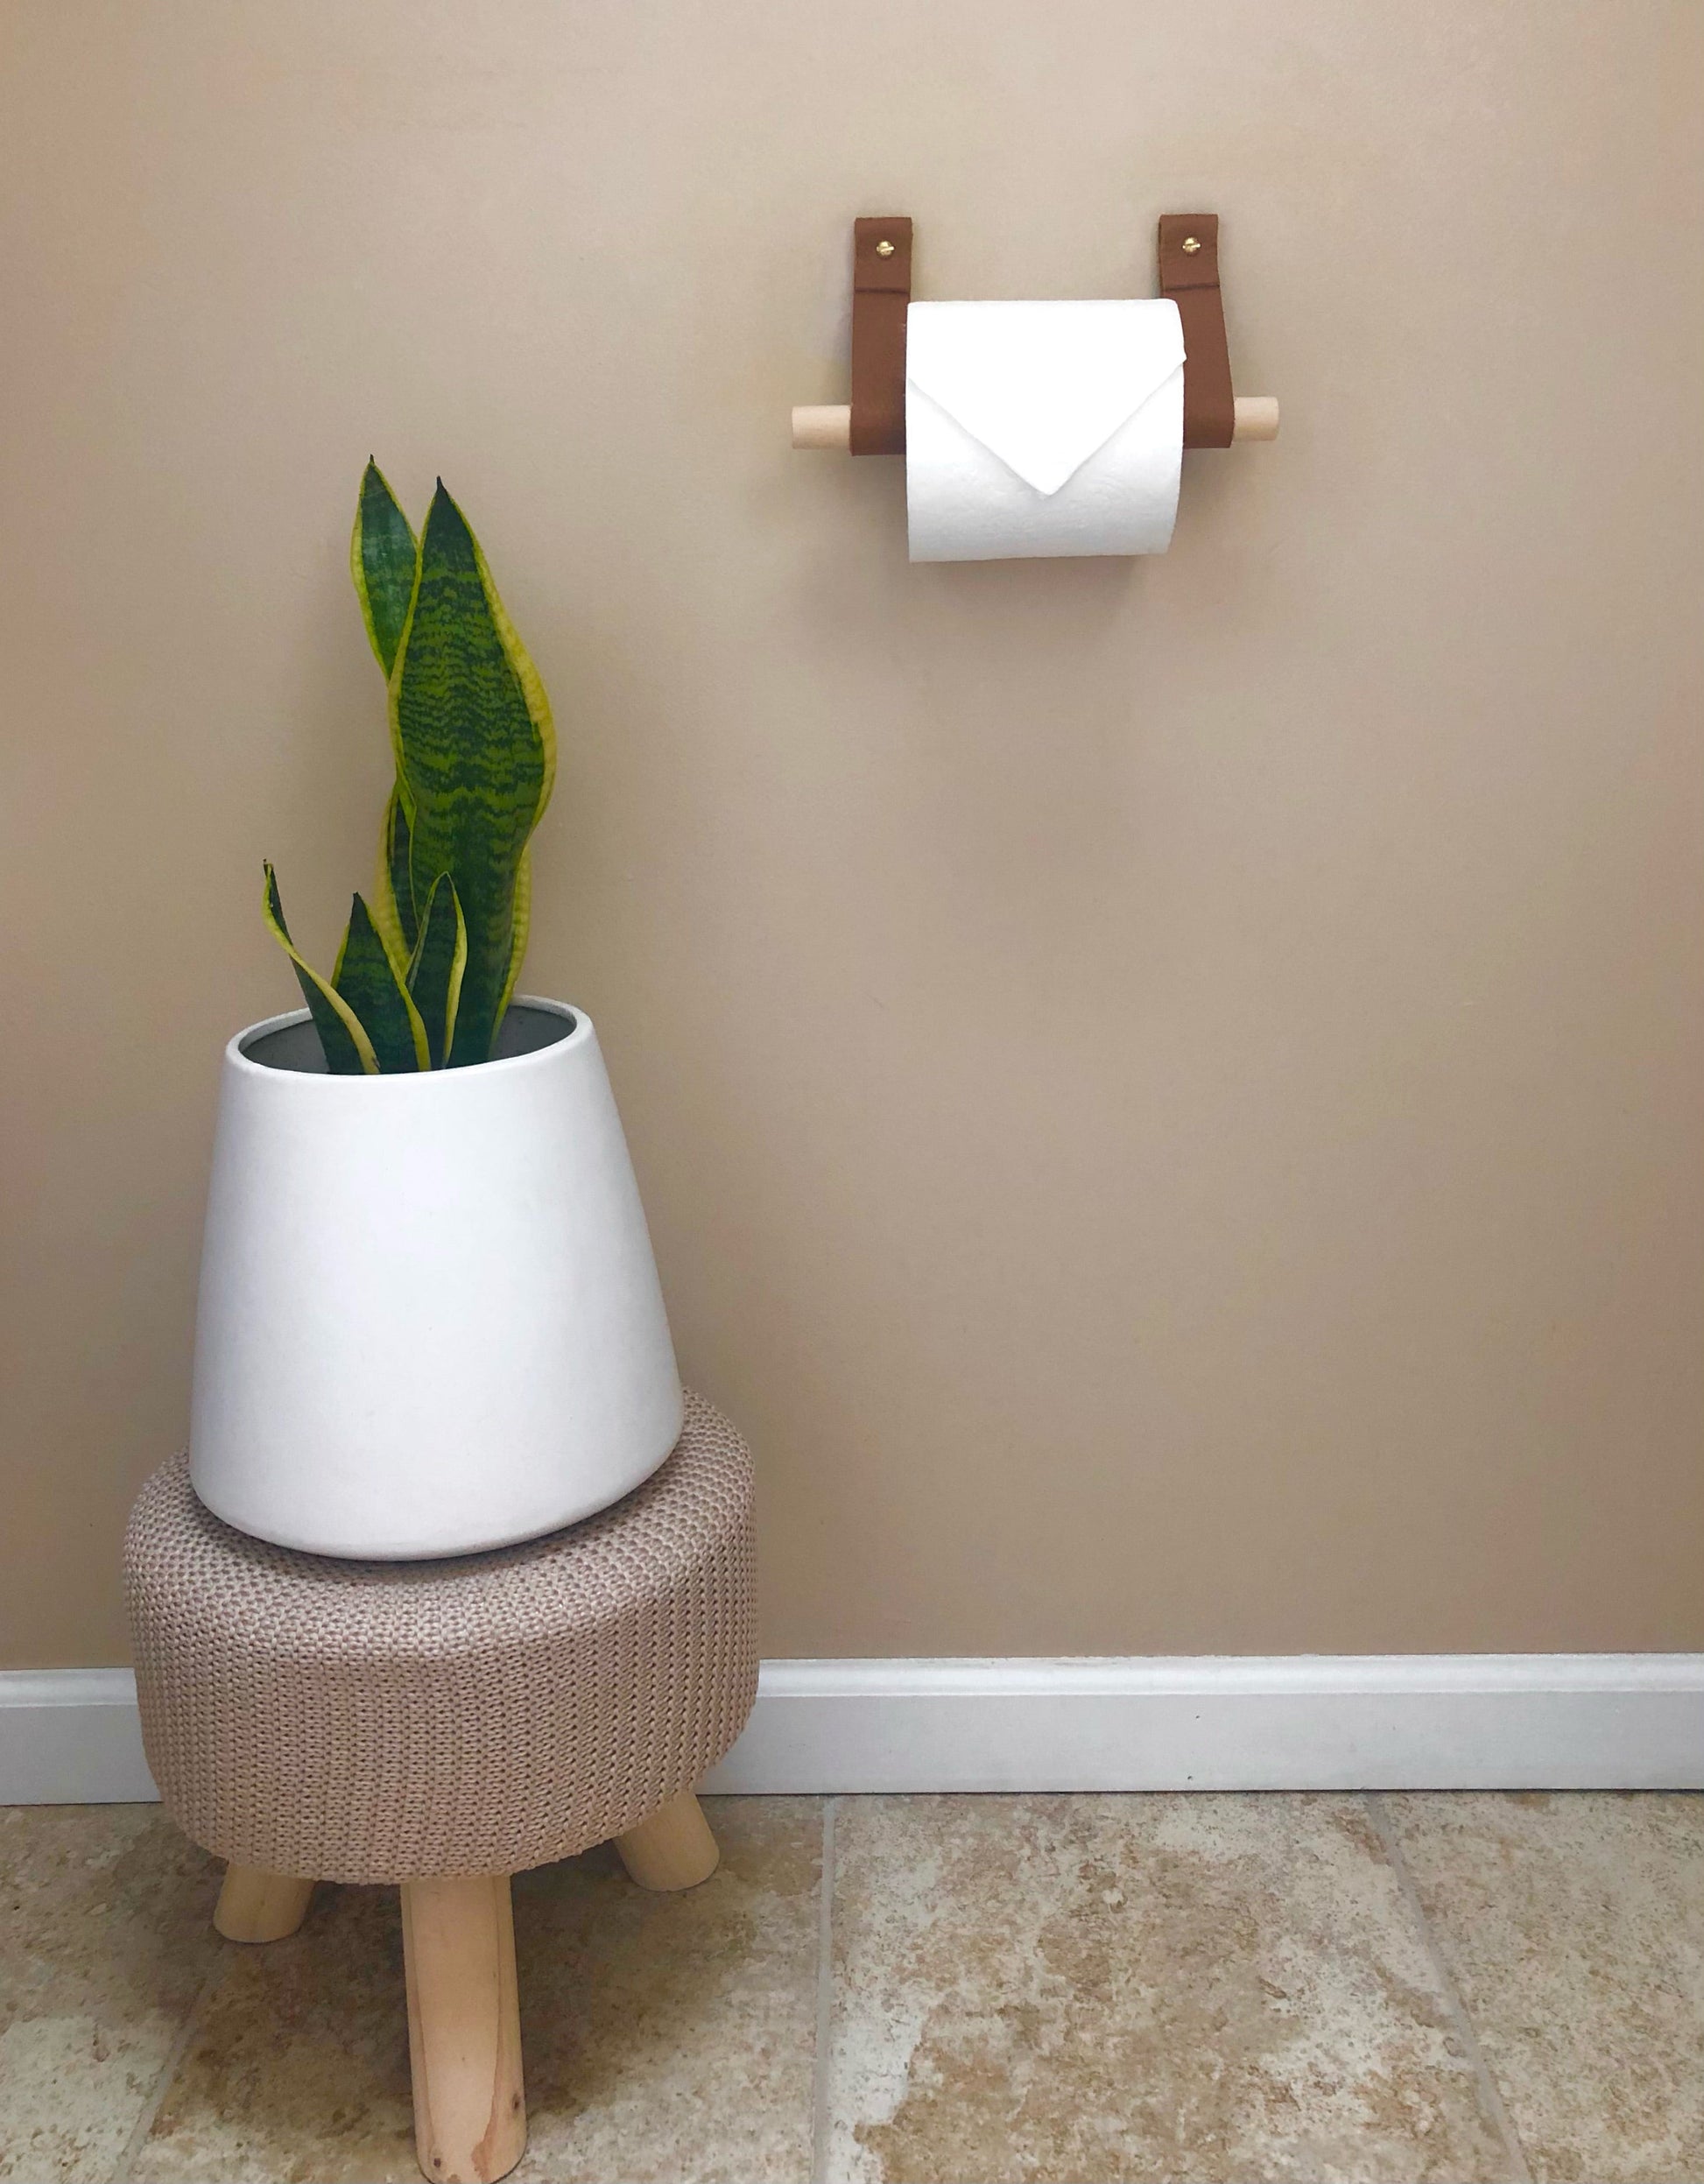 Wood And Leather Hand Towel Holder Design Ideas  Hand towel holder,  Bathroom hand towel holder, Hand towels bathroom